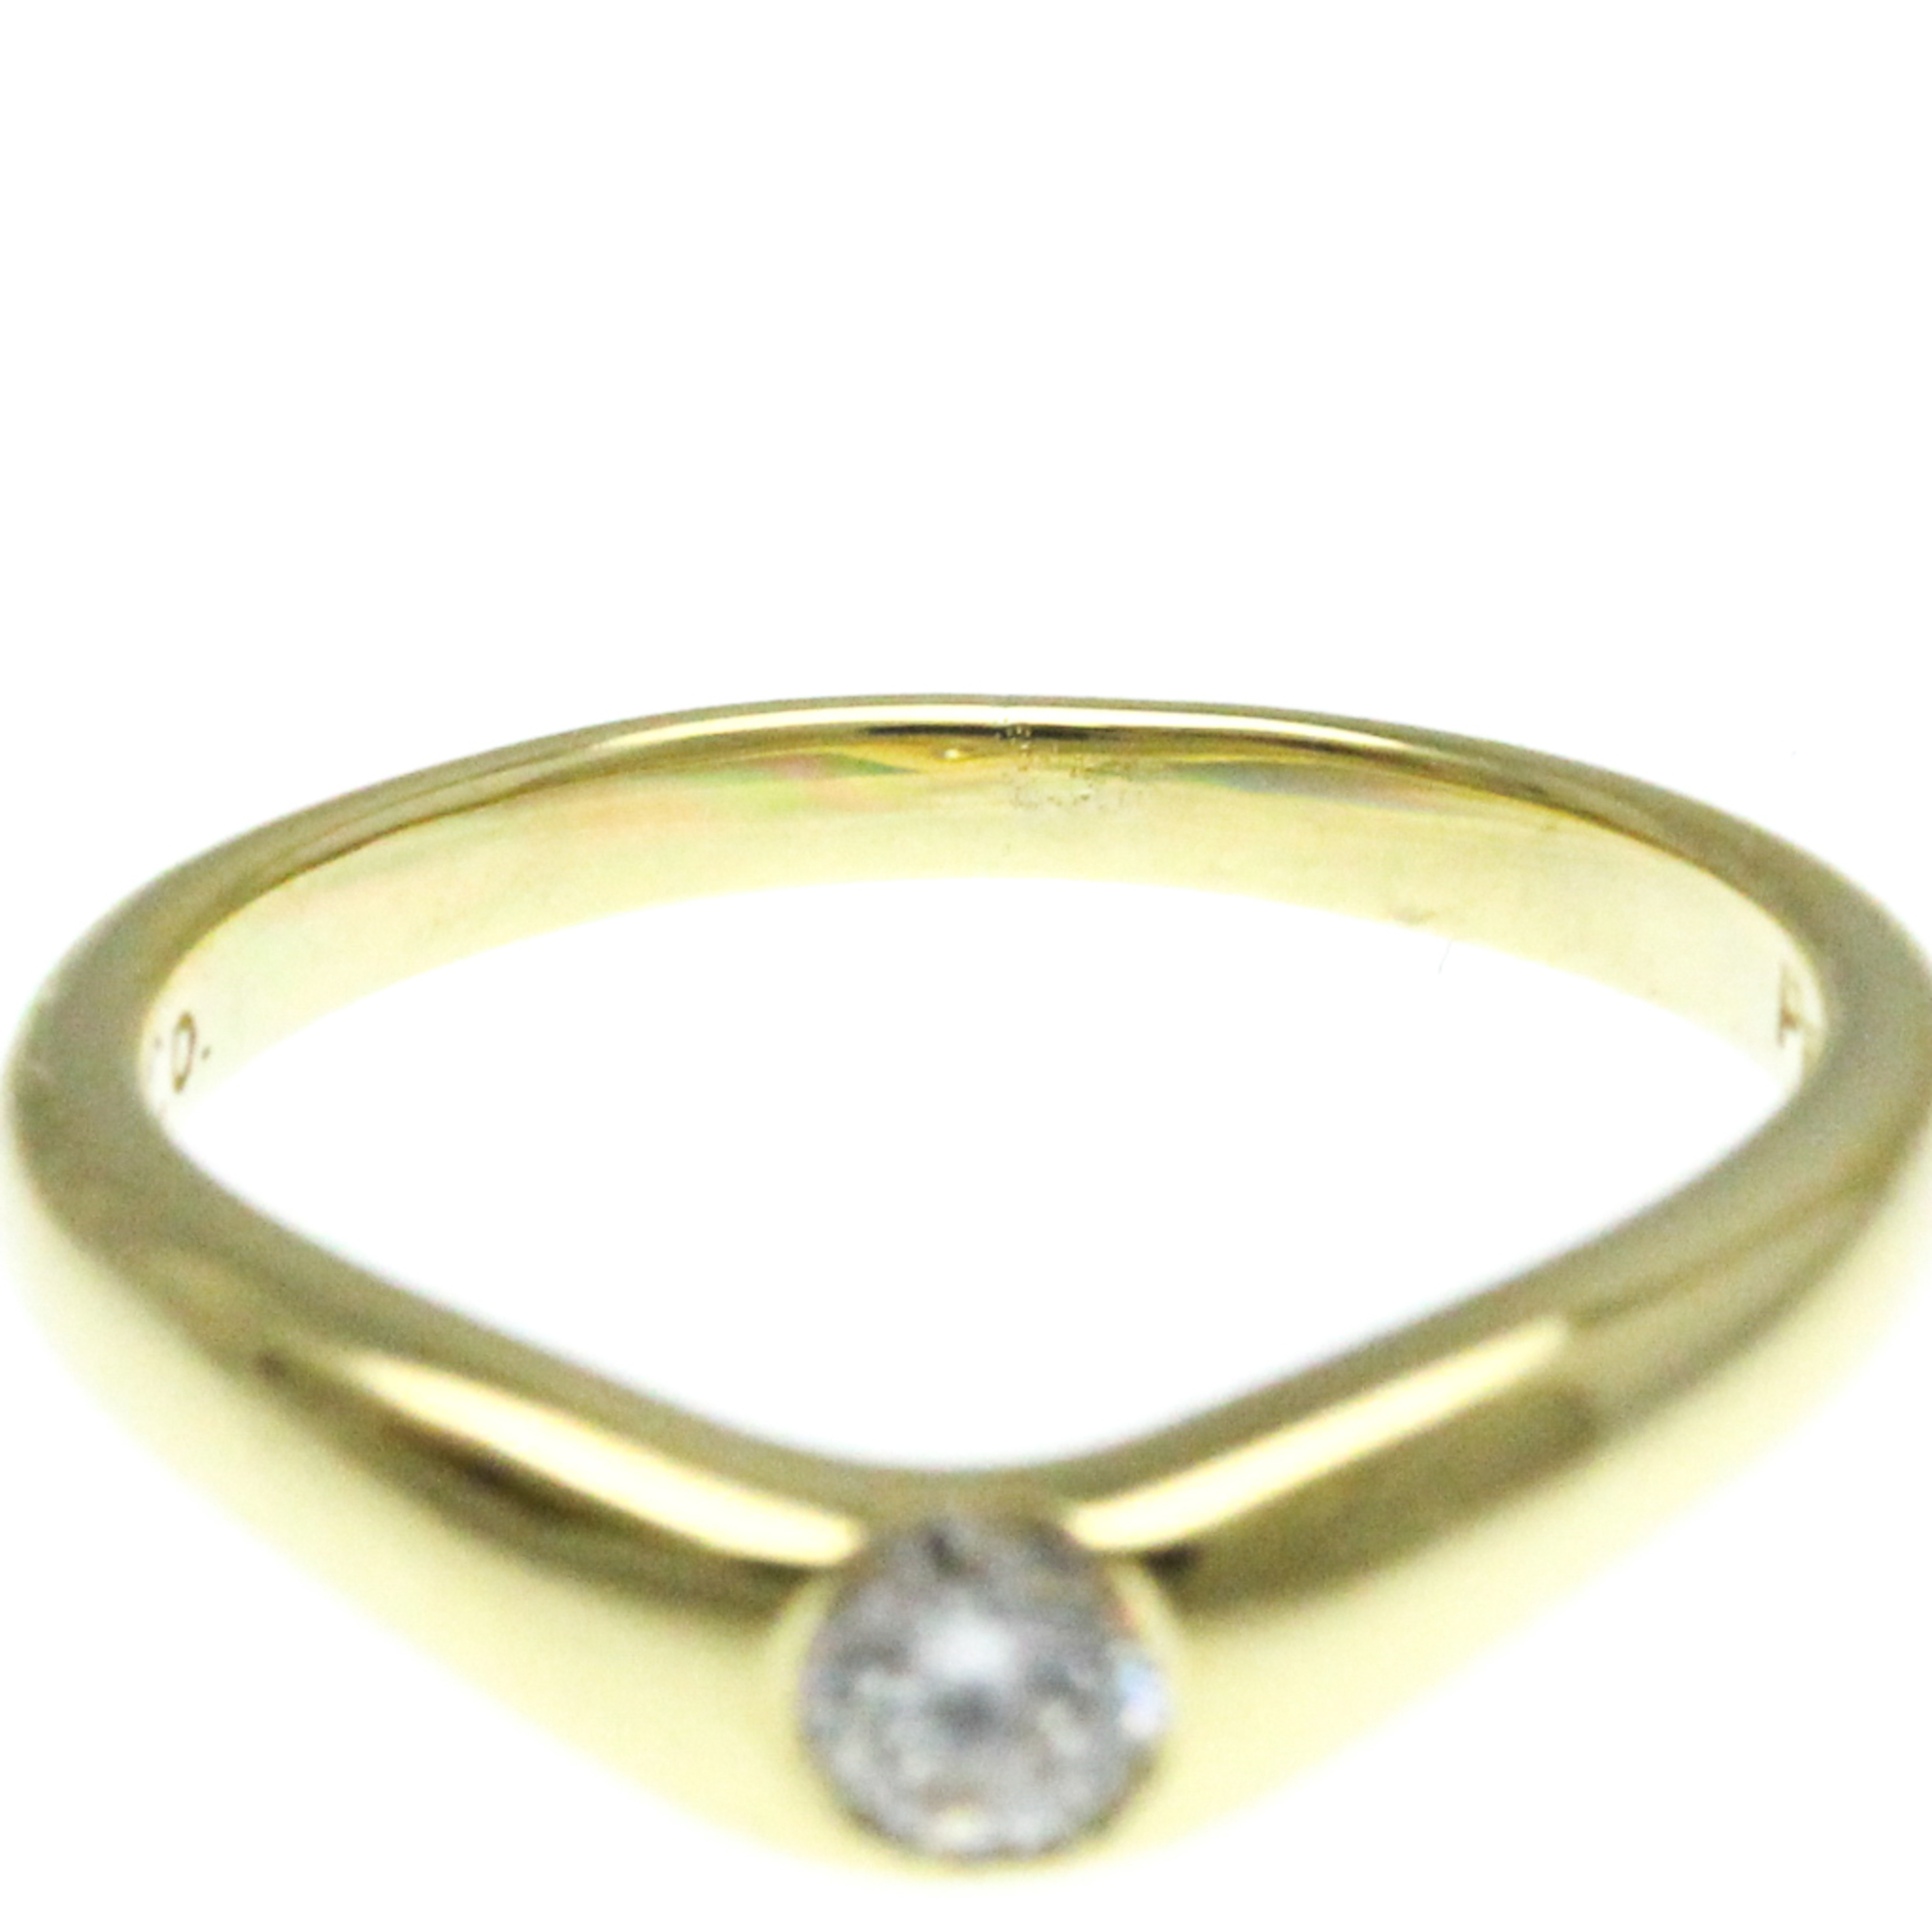 Tiffany Curved Band Ring Yellow Gold (18K) Fashion Diamond Band Ring Gold